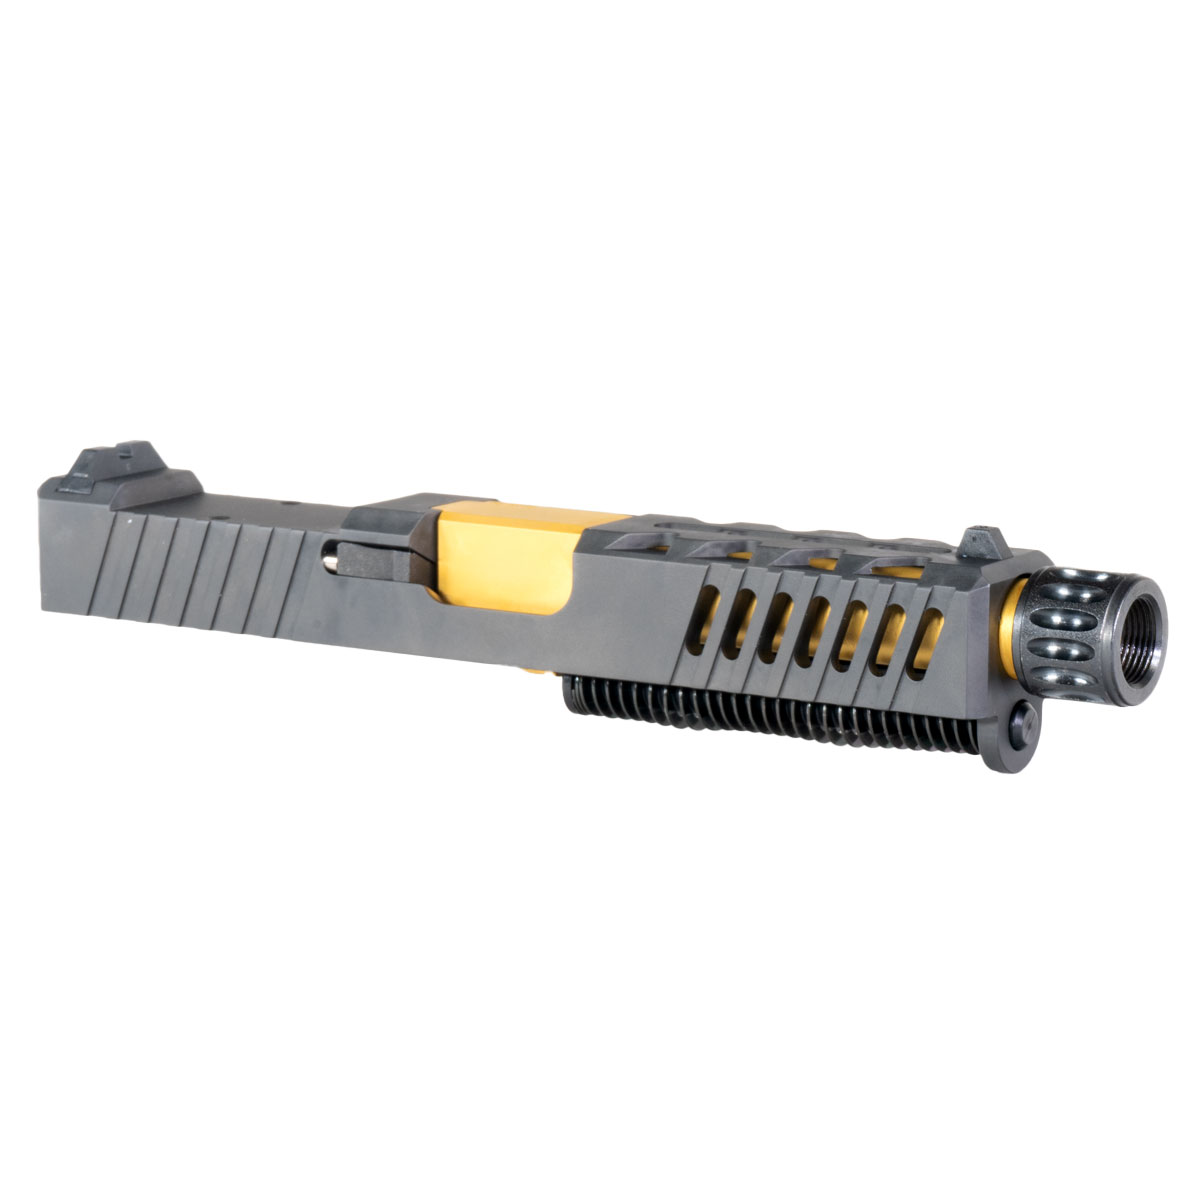 DD 'Aufschwung' 9mm Complete Slide Kit - Glock 19 Gen 1-3 Compatible